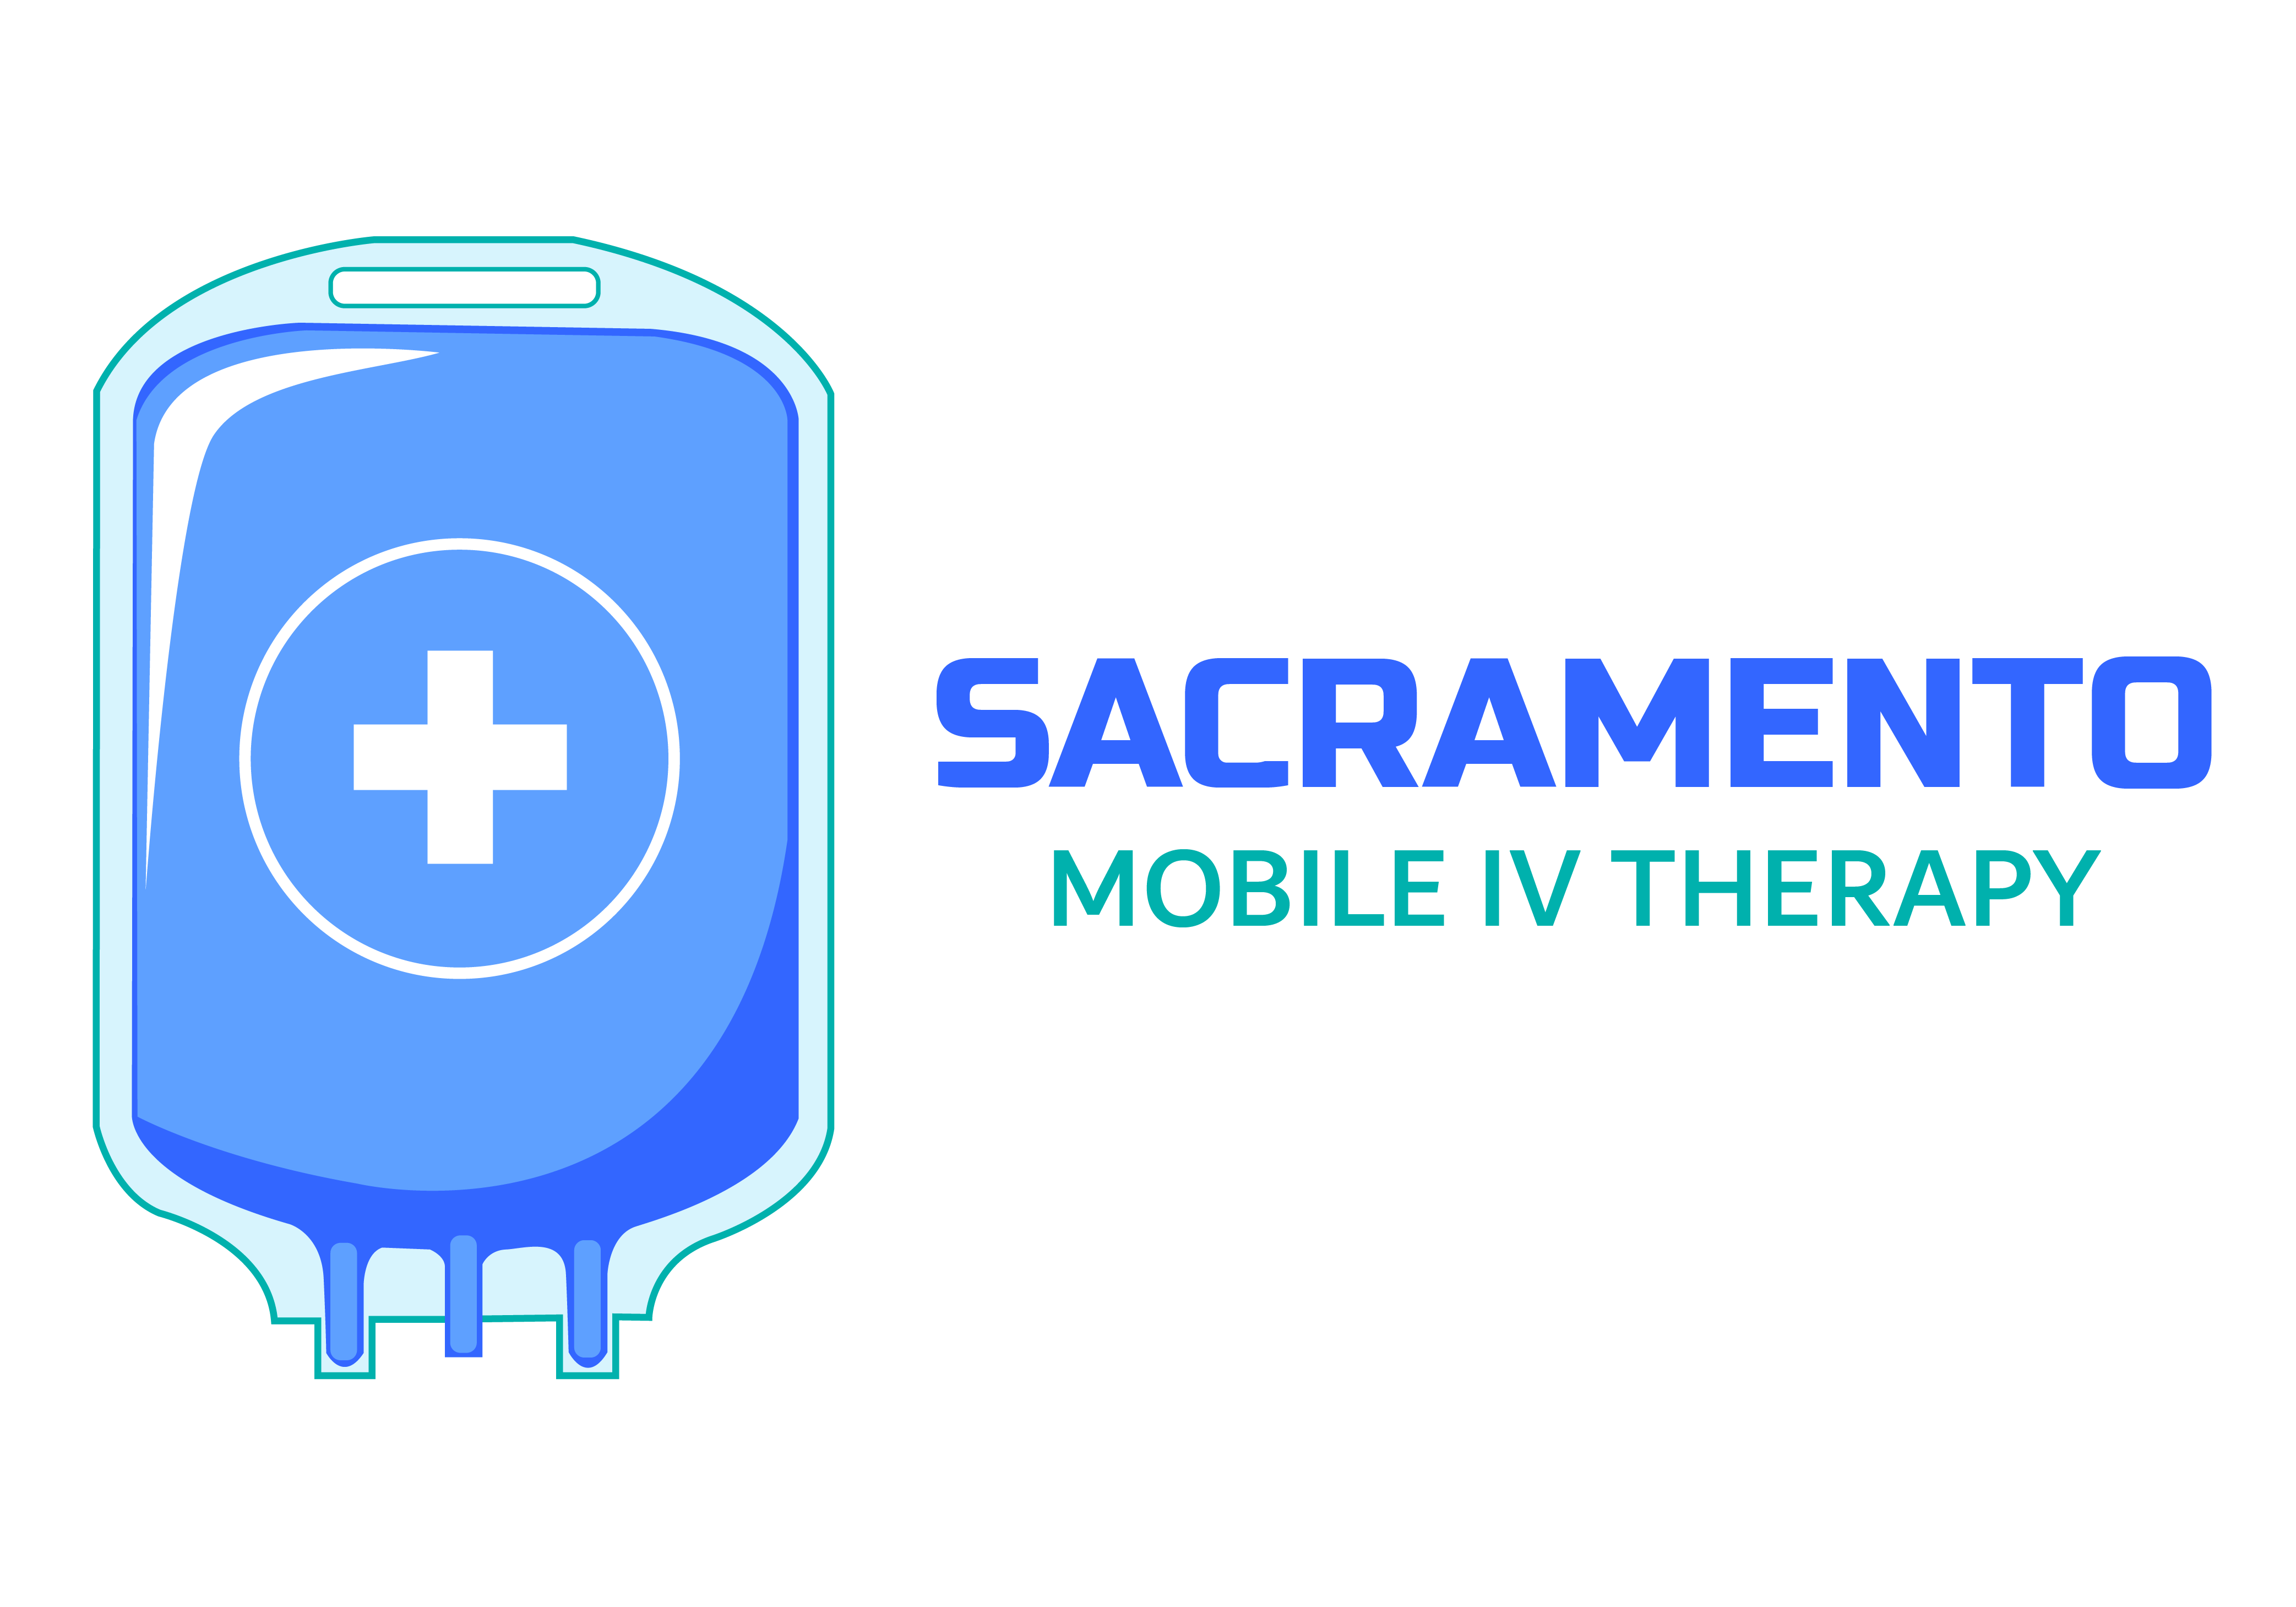 mobile iv therapy logo for sacramento mobile iv therapy